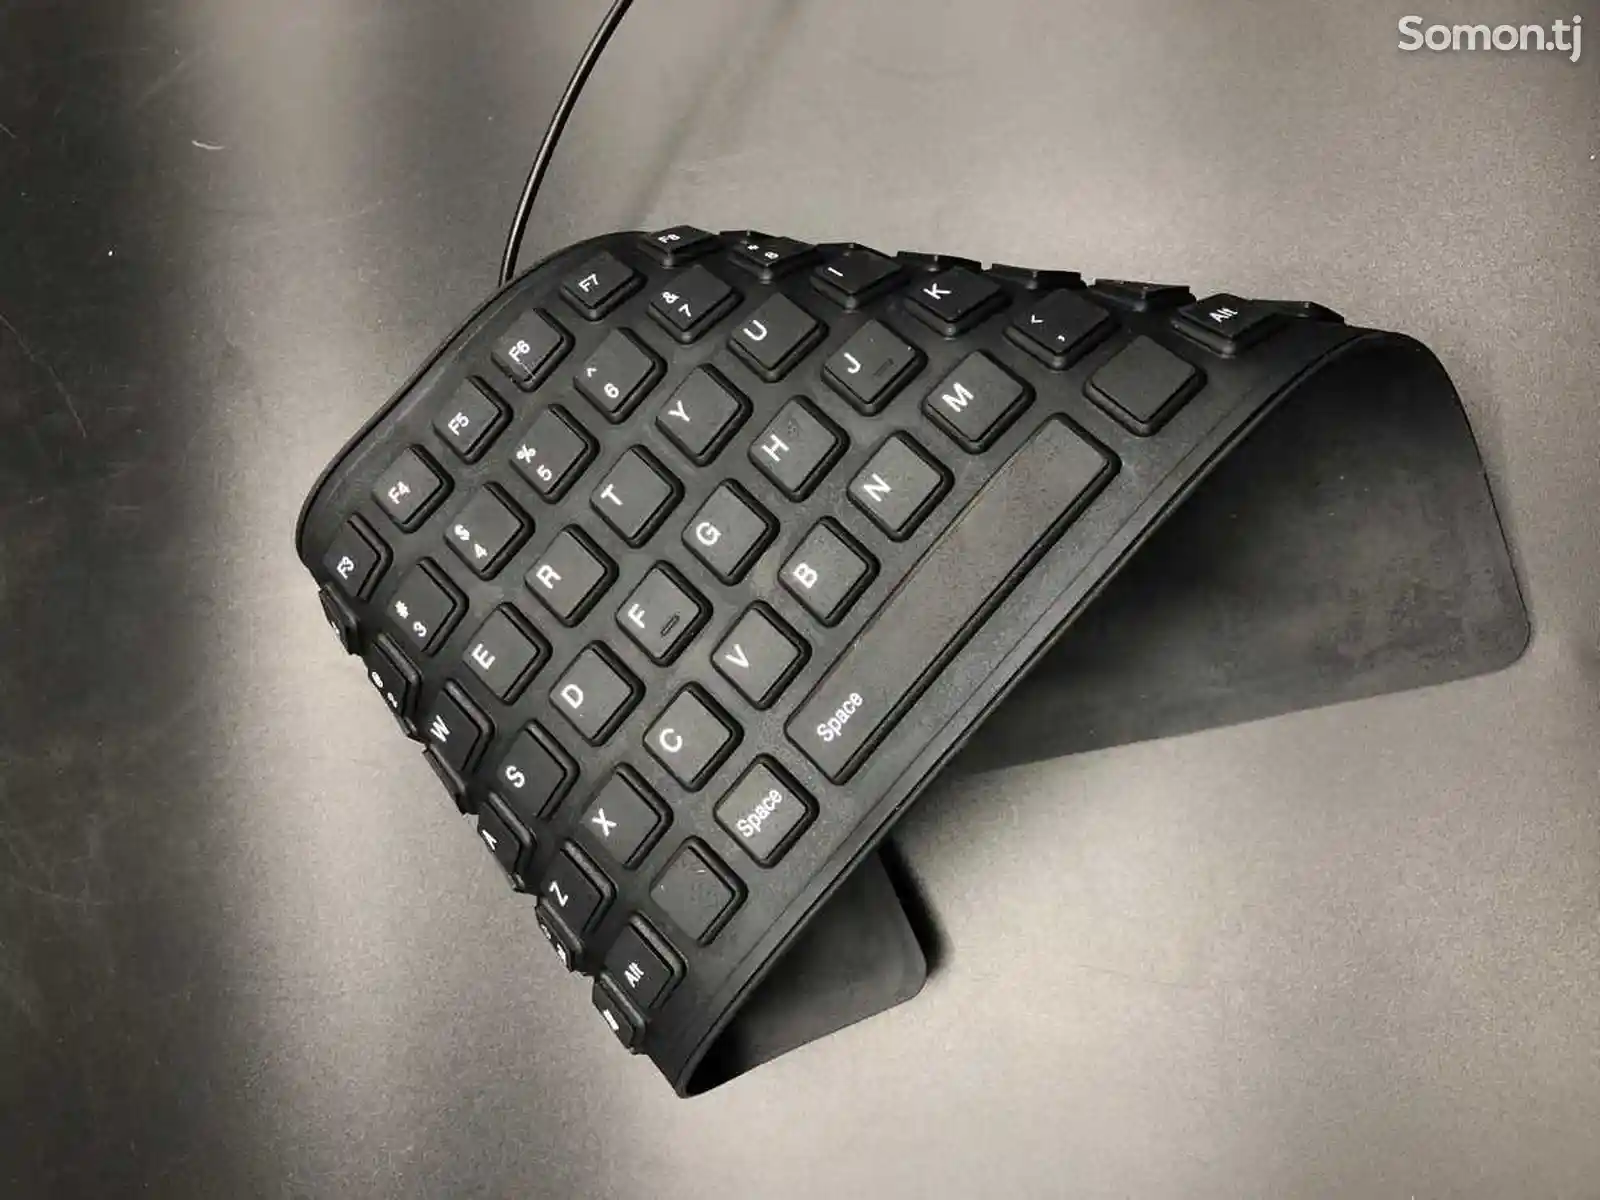 Flexible Keyboard-сгибающая клавиатура-1